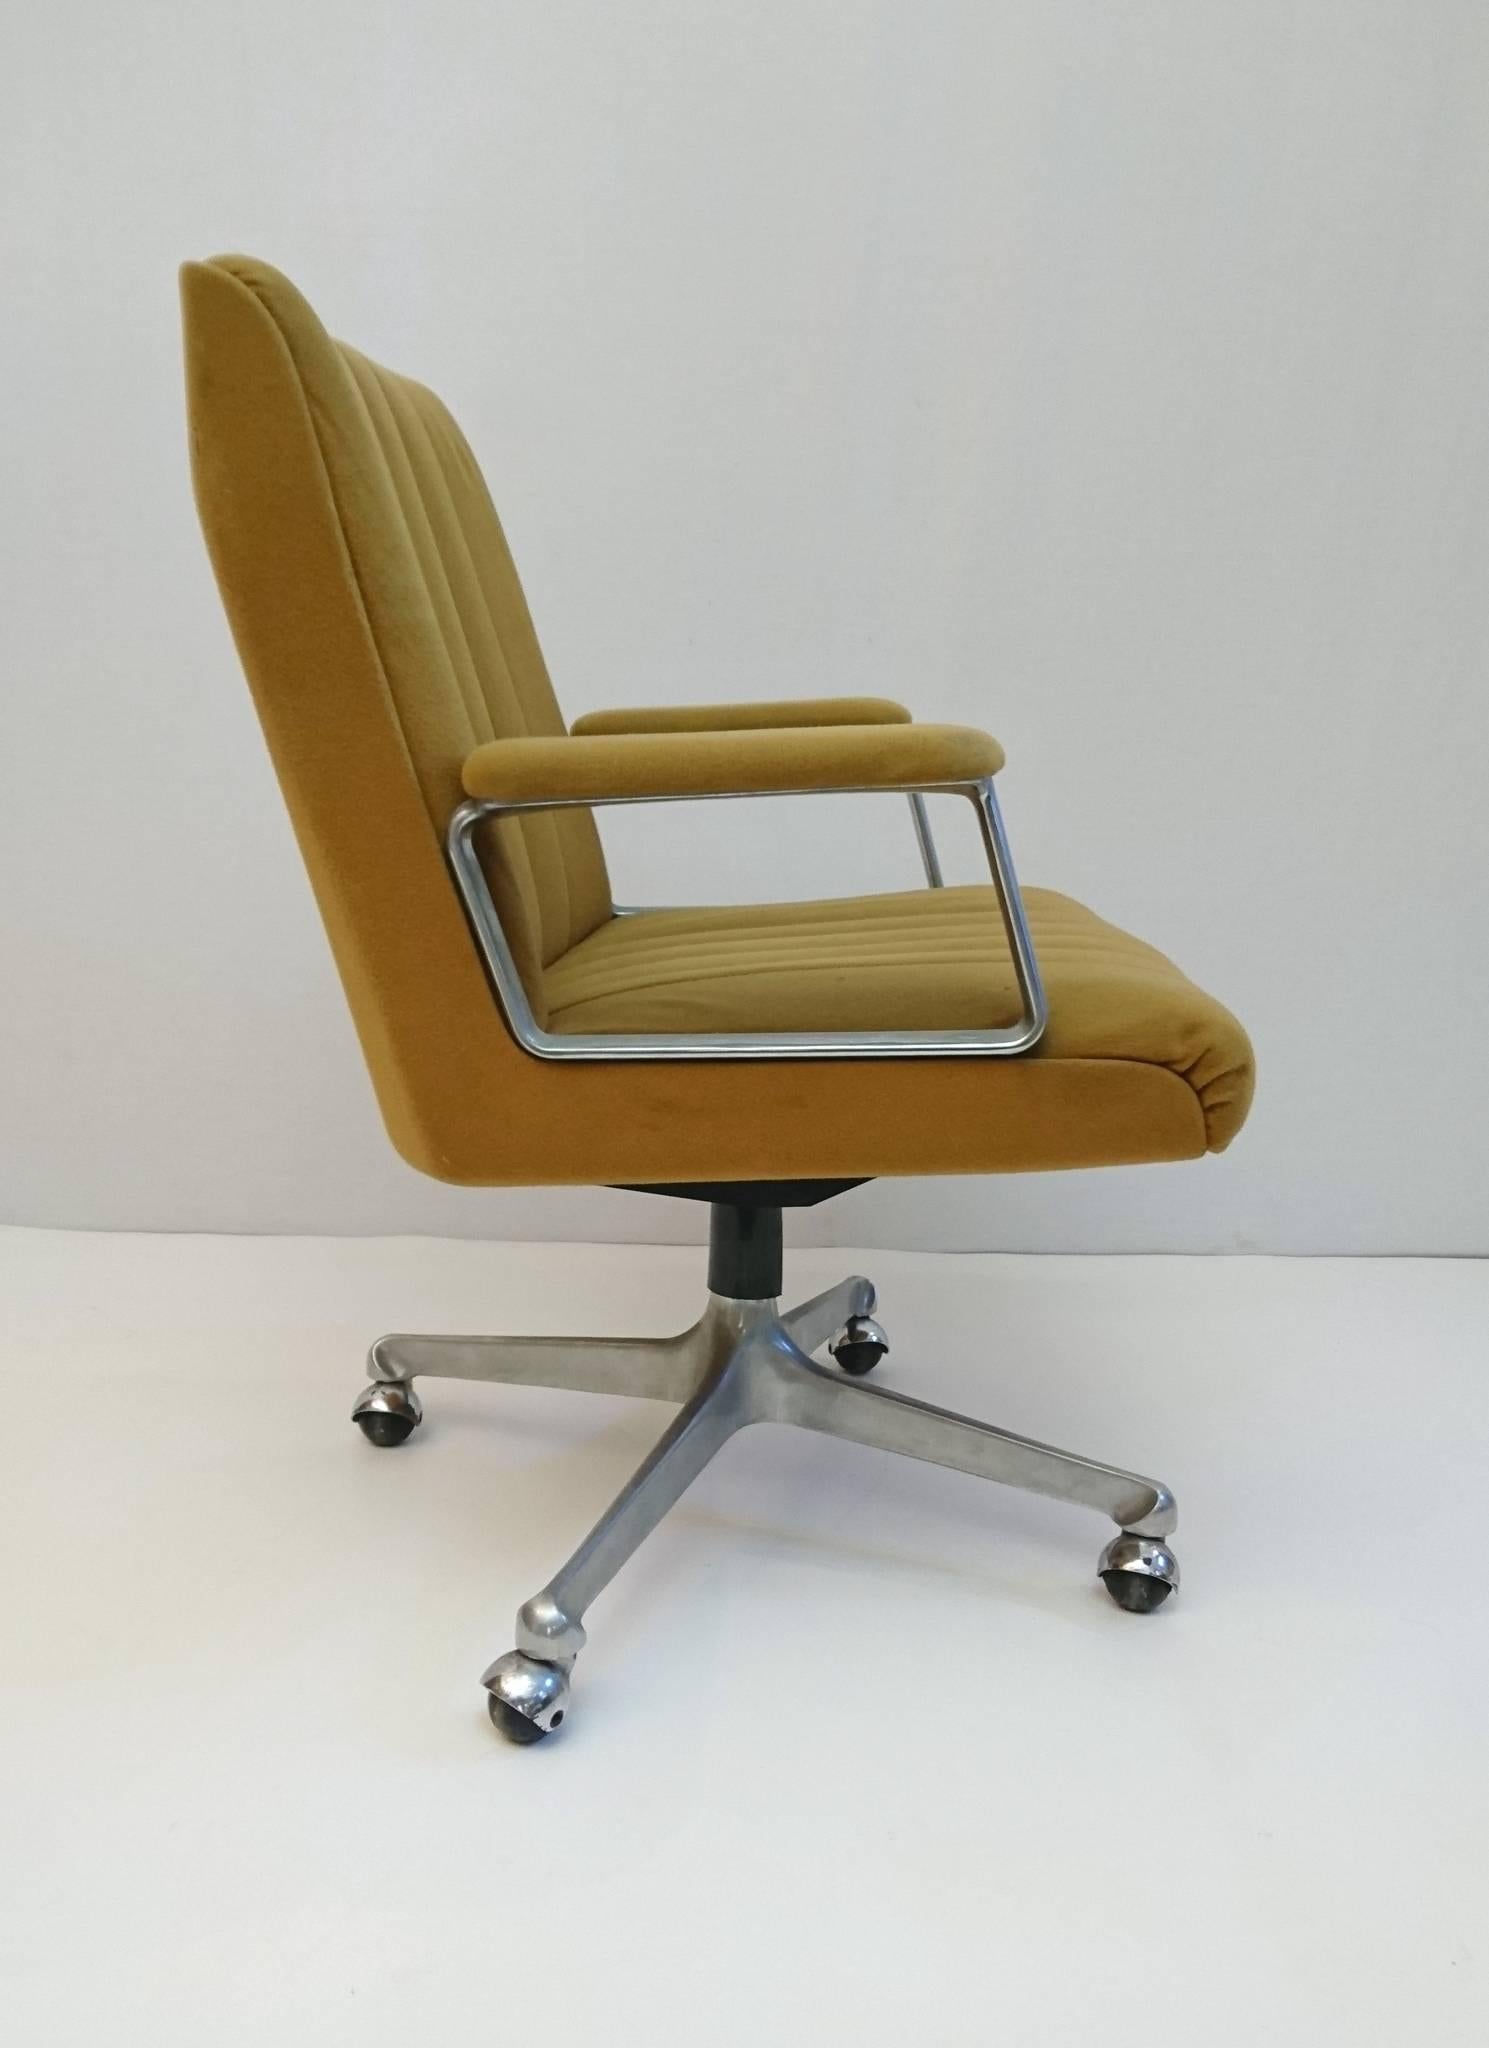 Osvaldo Borsani 'P 125' desk chair from 1966-1967. Made by Tecno, Milan. Cast aluminium, chrome-plated, mustard yellow fabric. Adjustable height.